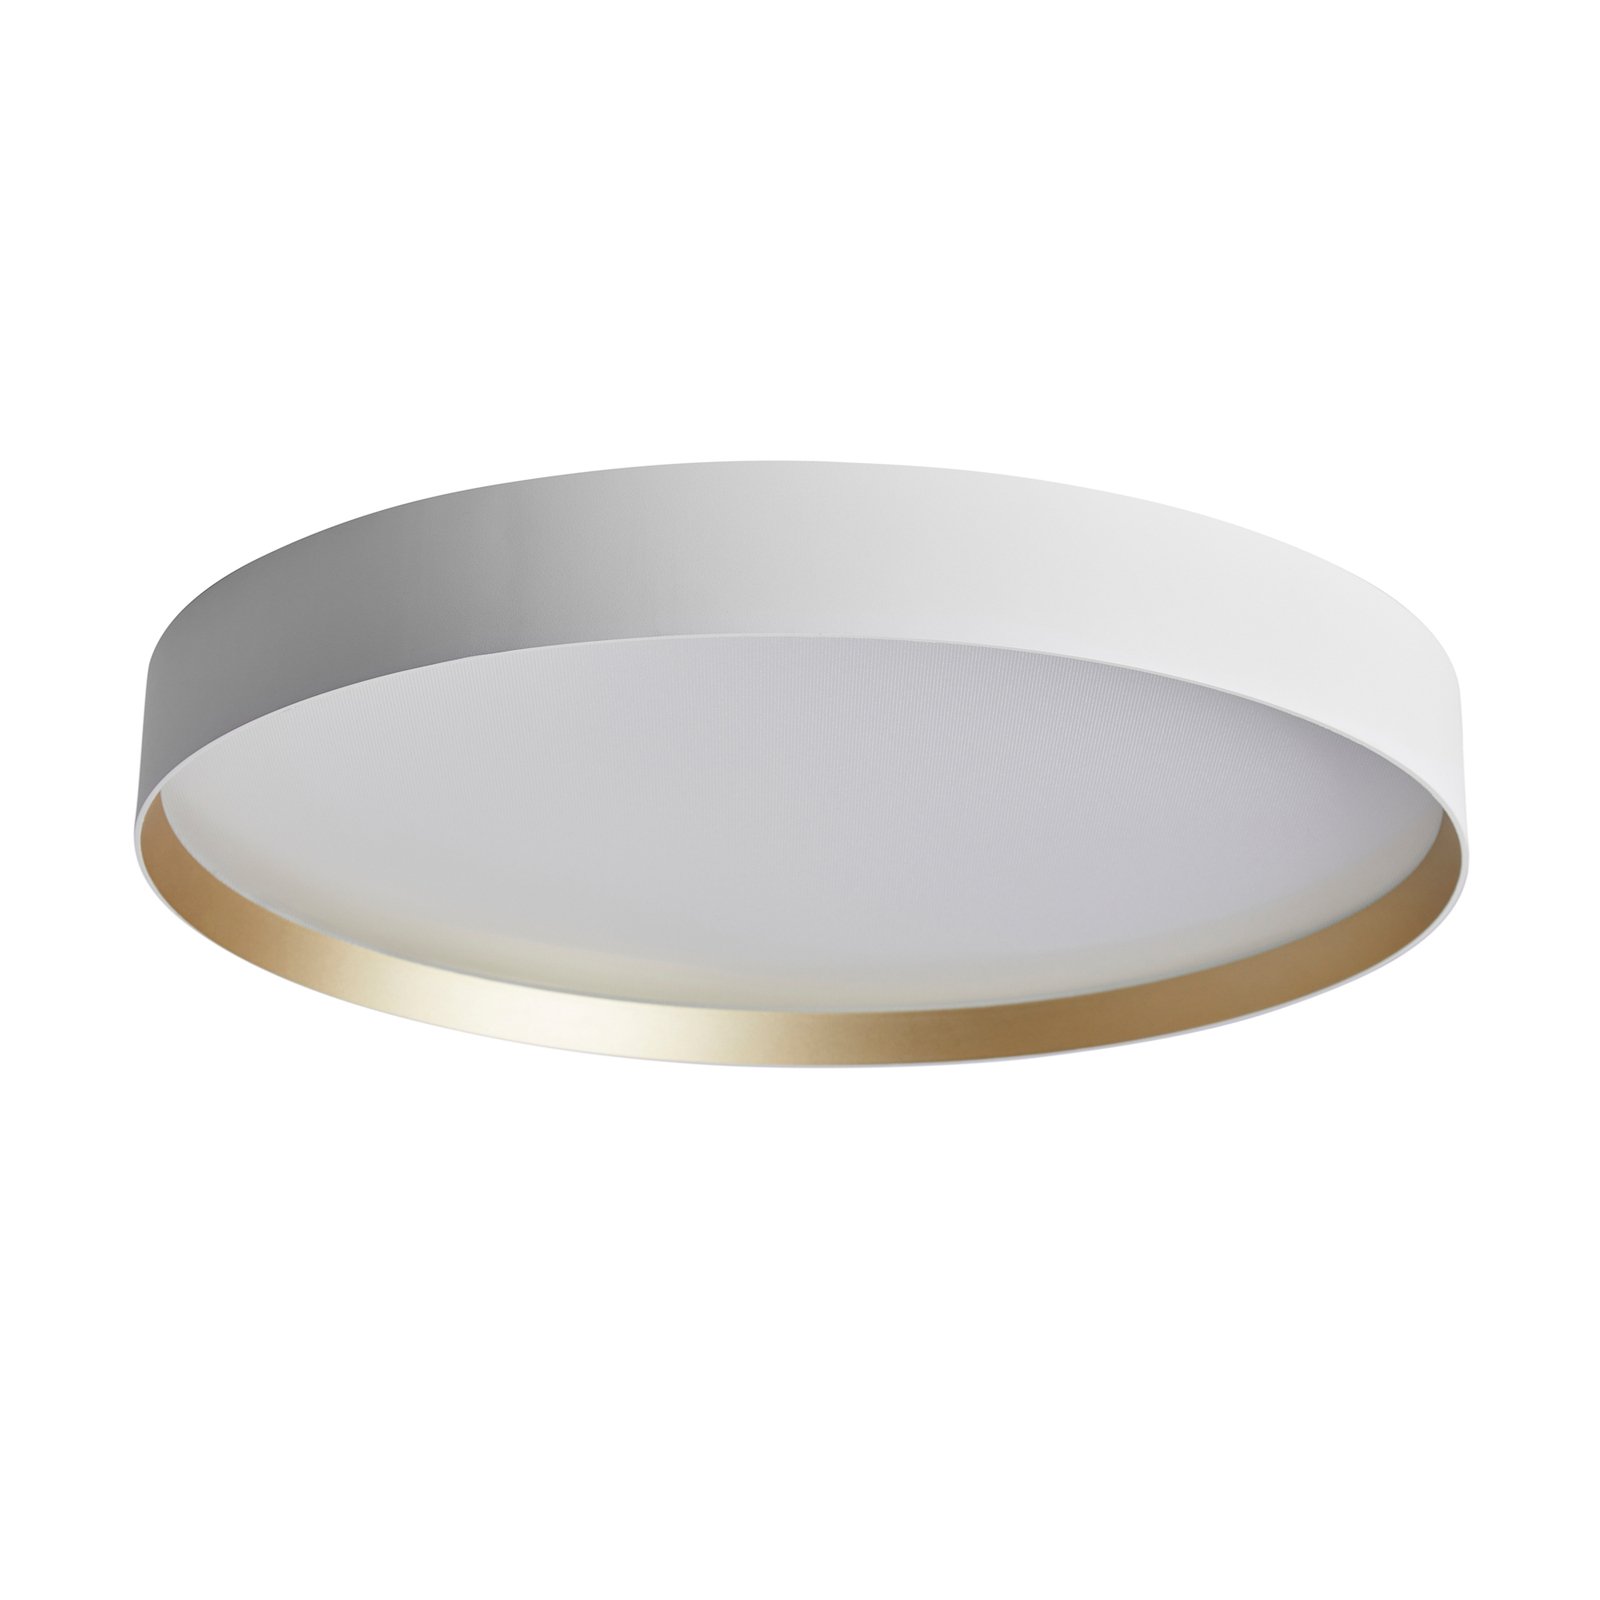 LOOM DESIGN Lucia LED-Deckenlampe Ø60cm weiß/gold